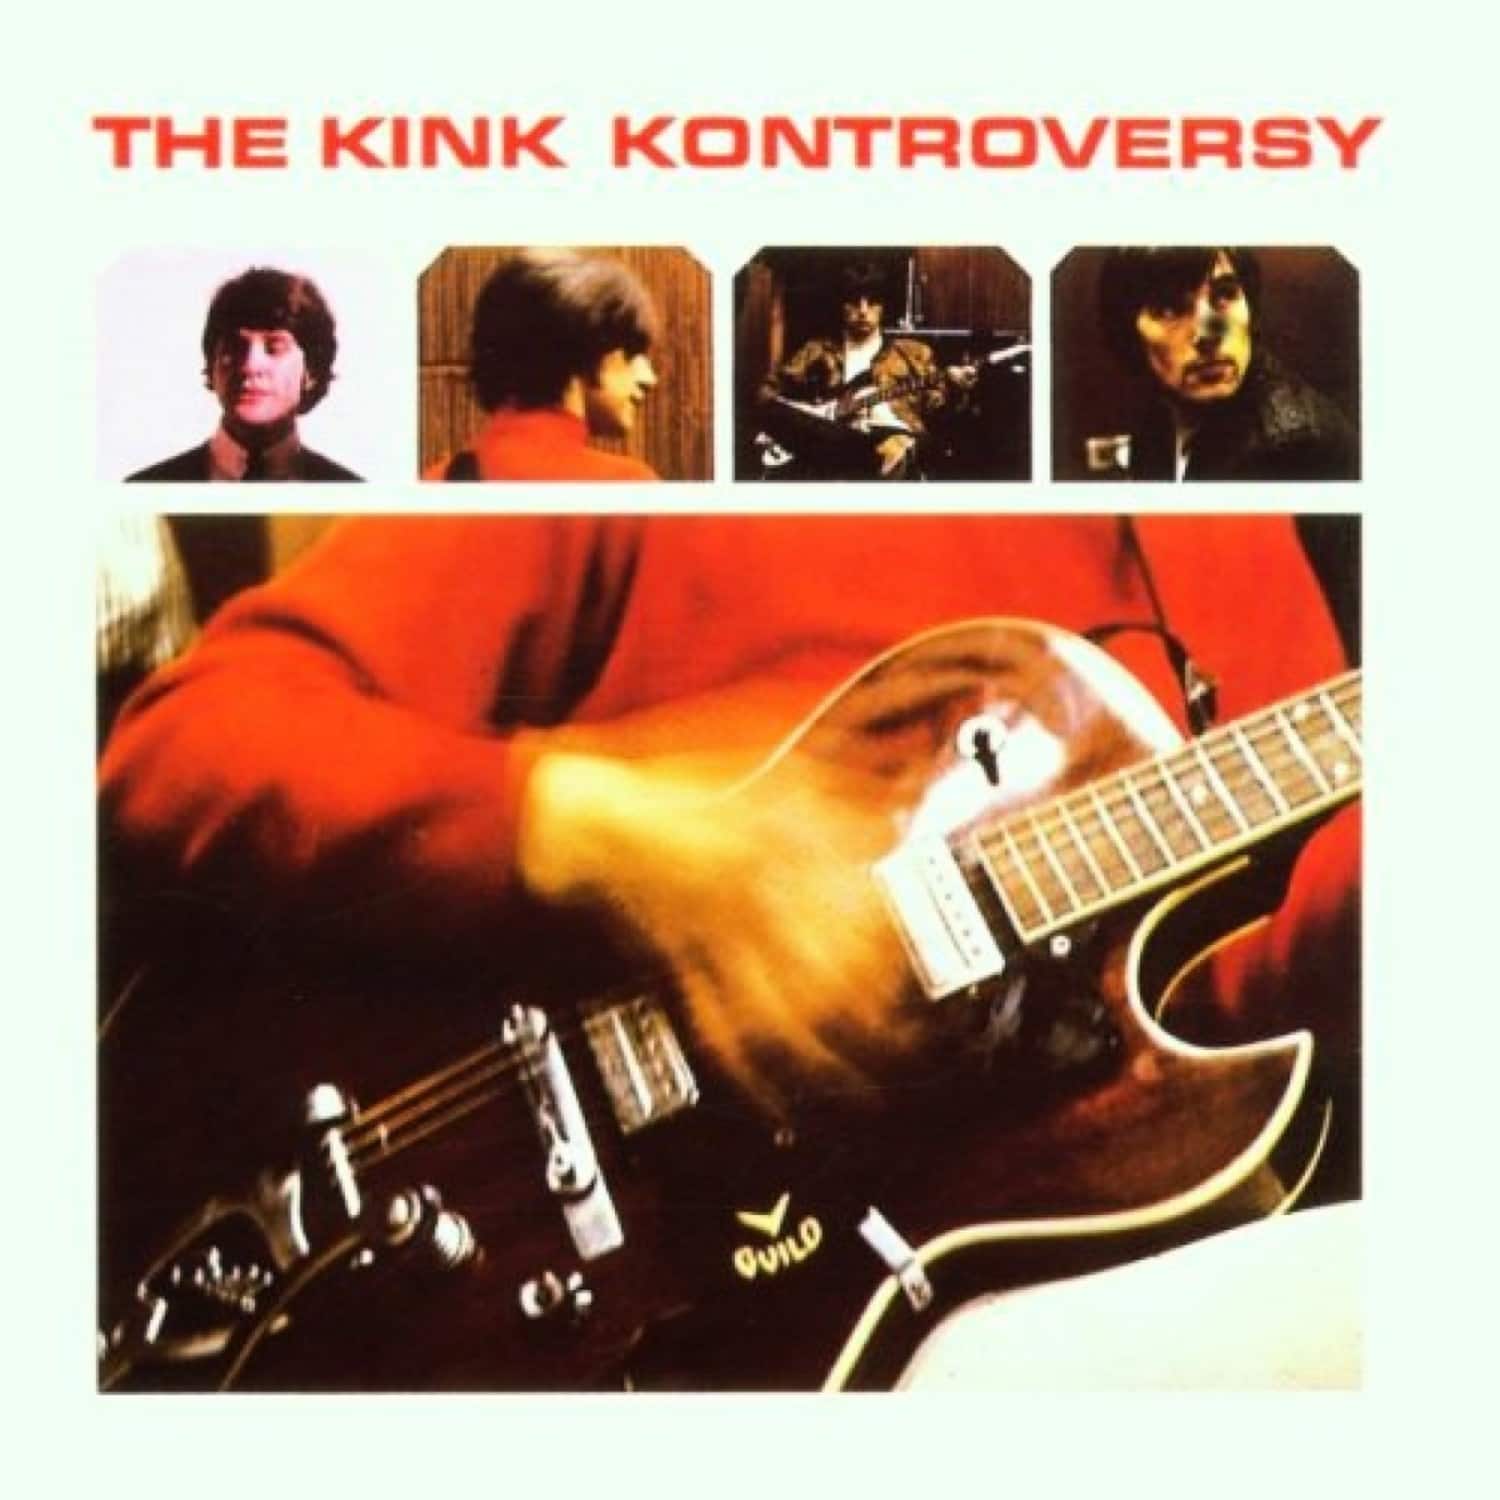 The Kinks - THE KINK KONTROVERSY 